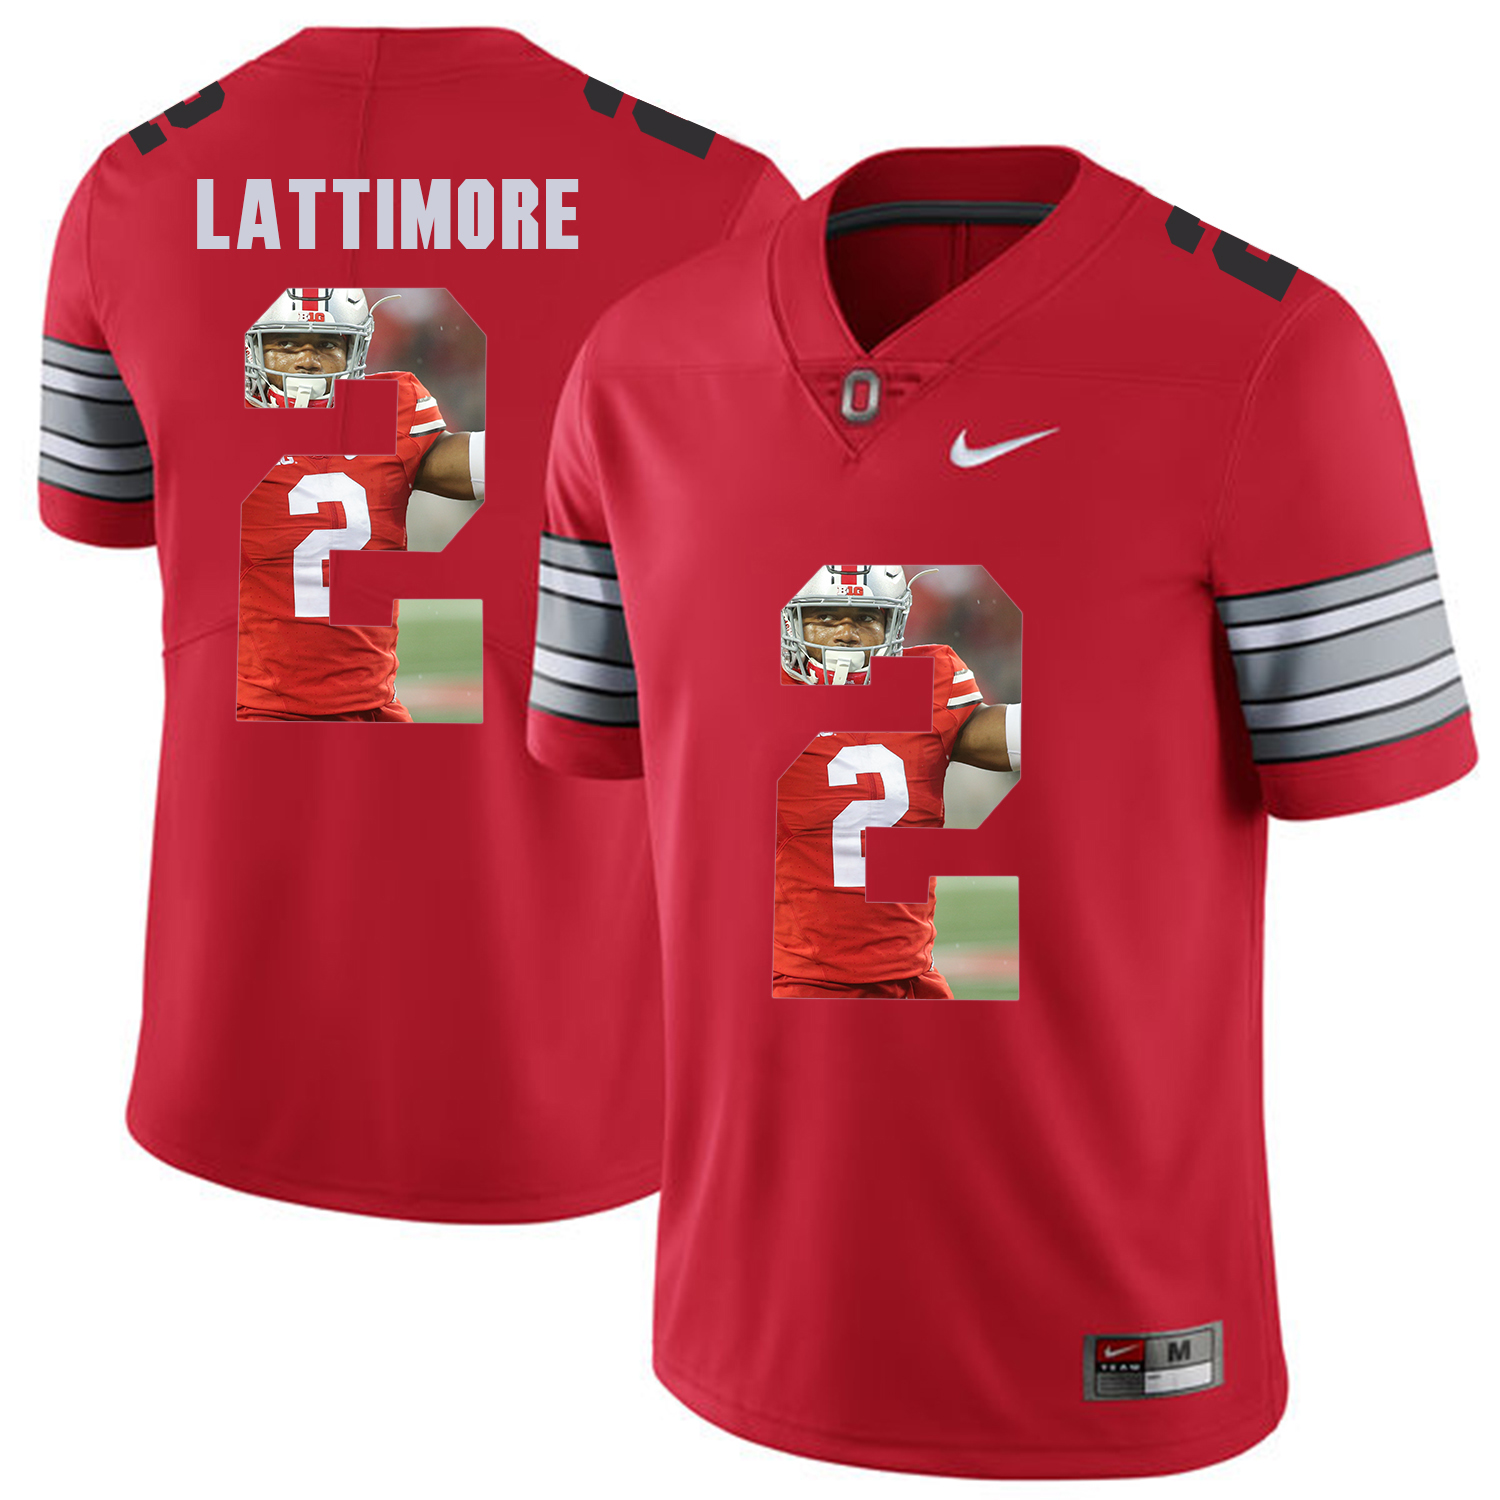 Men Ohio State 2 Lattimore Red Fashion Edition Customized NCAA Jerseys